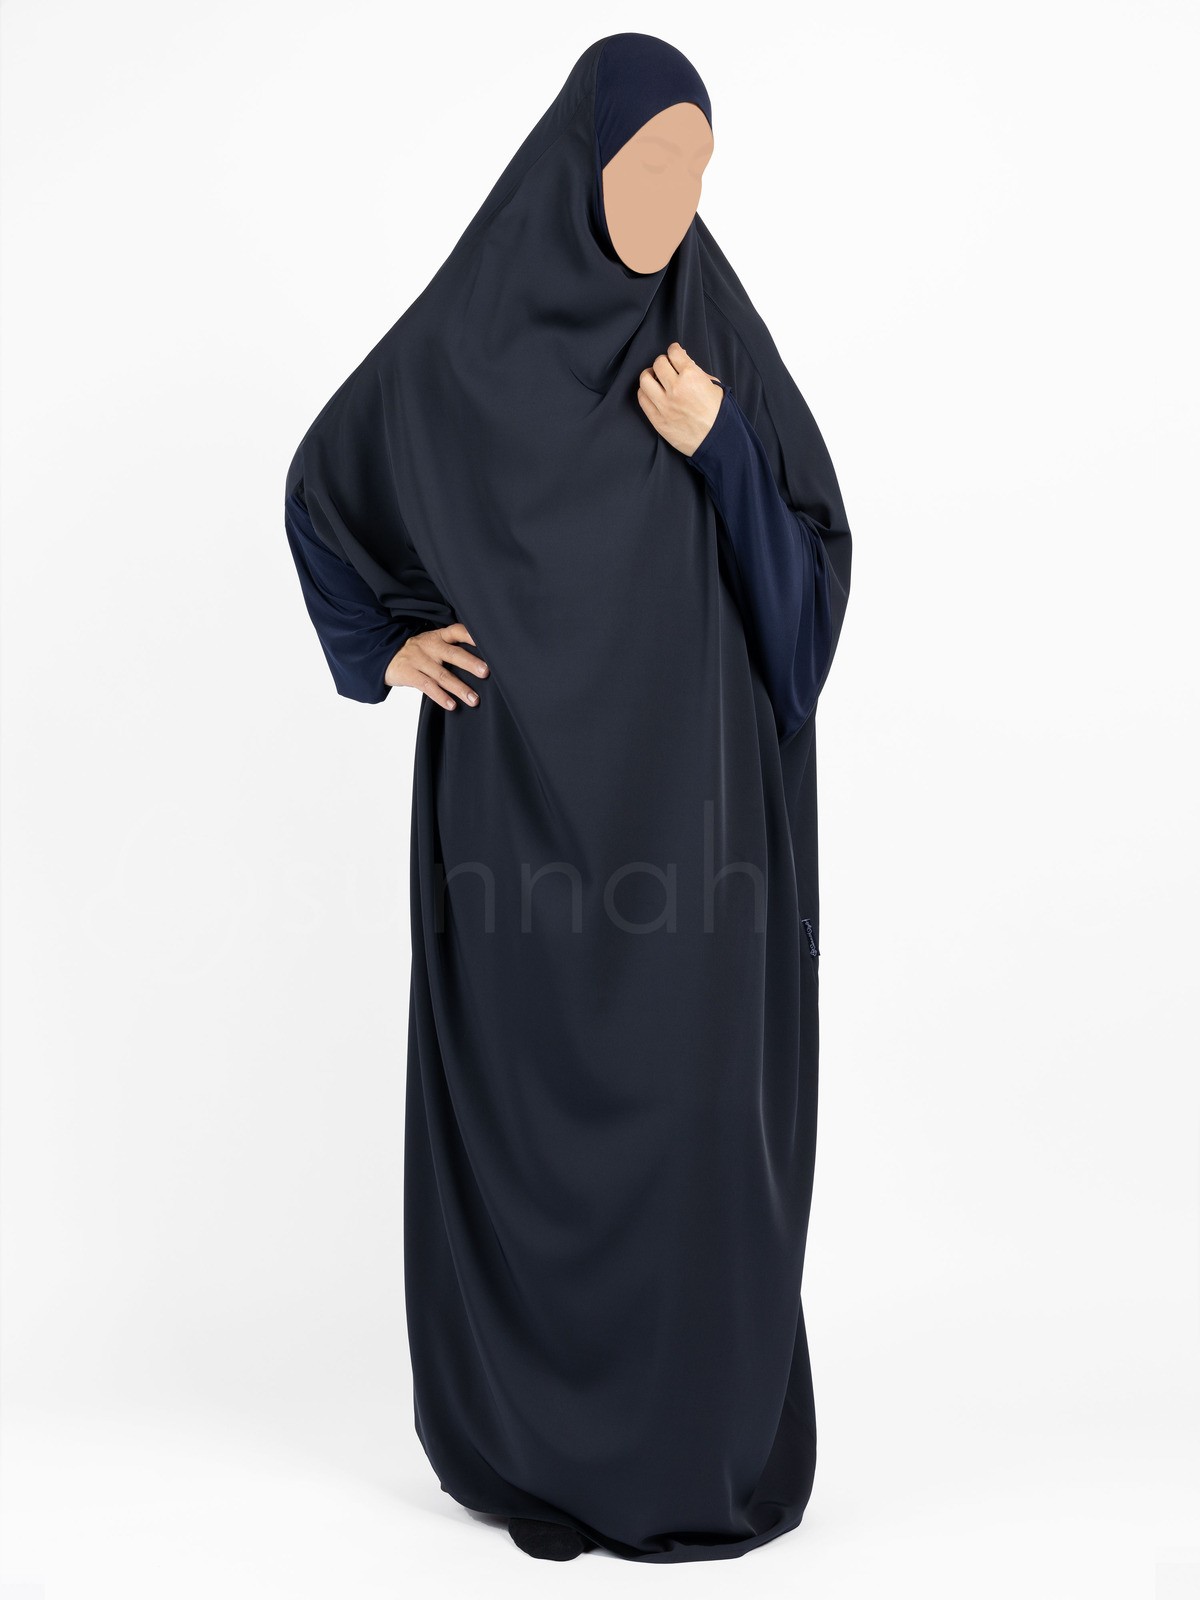 Sunnah Style - Signature Full Length Jilbab (Navy Blue)